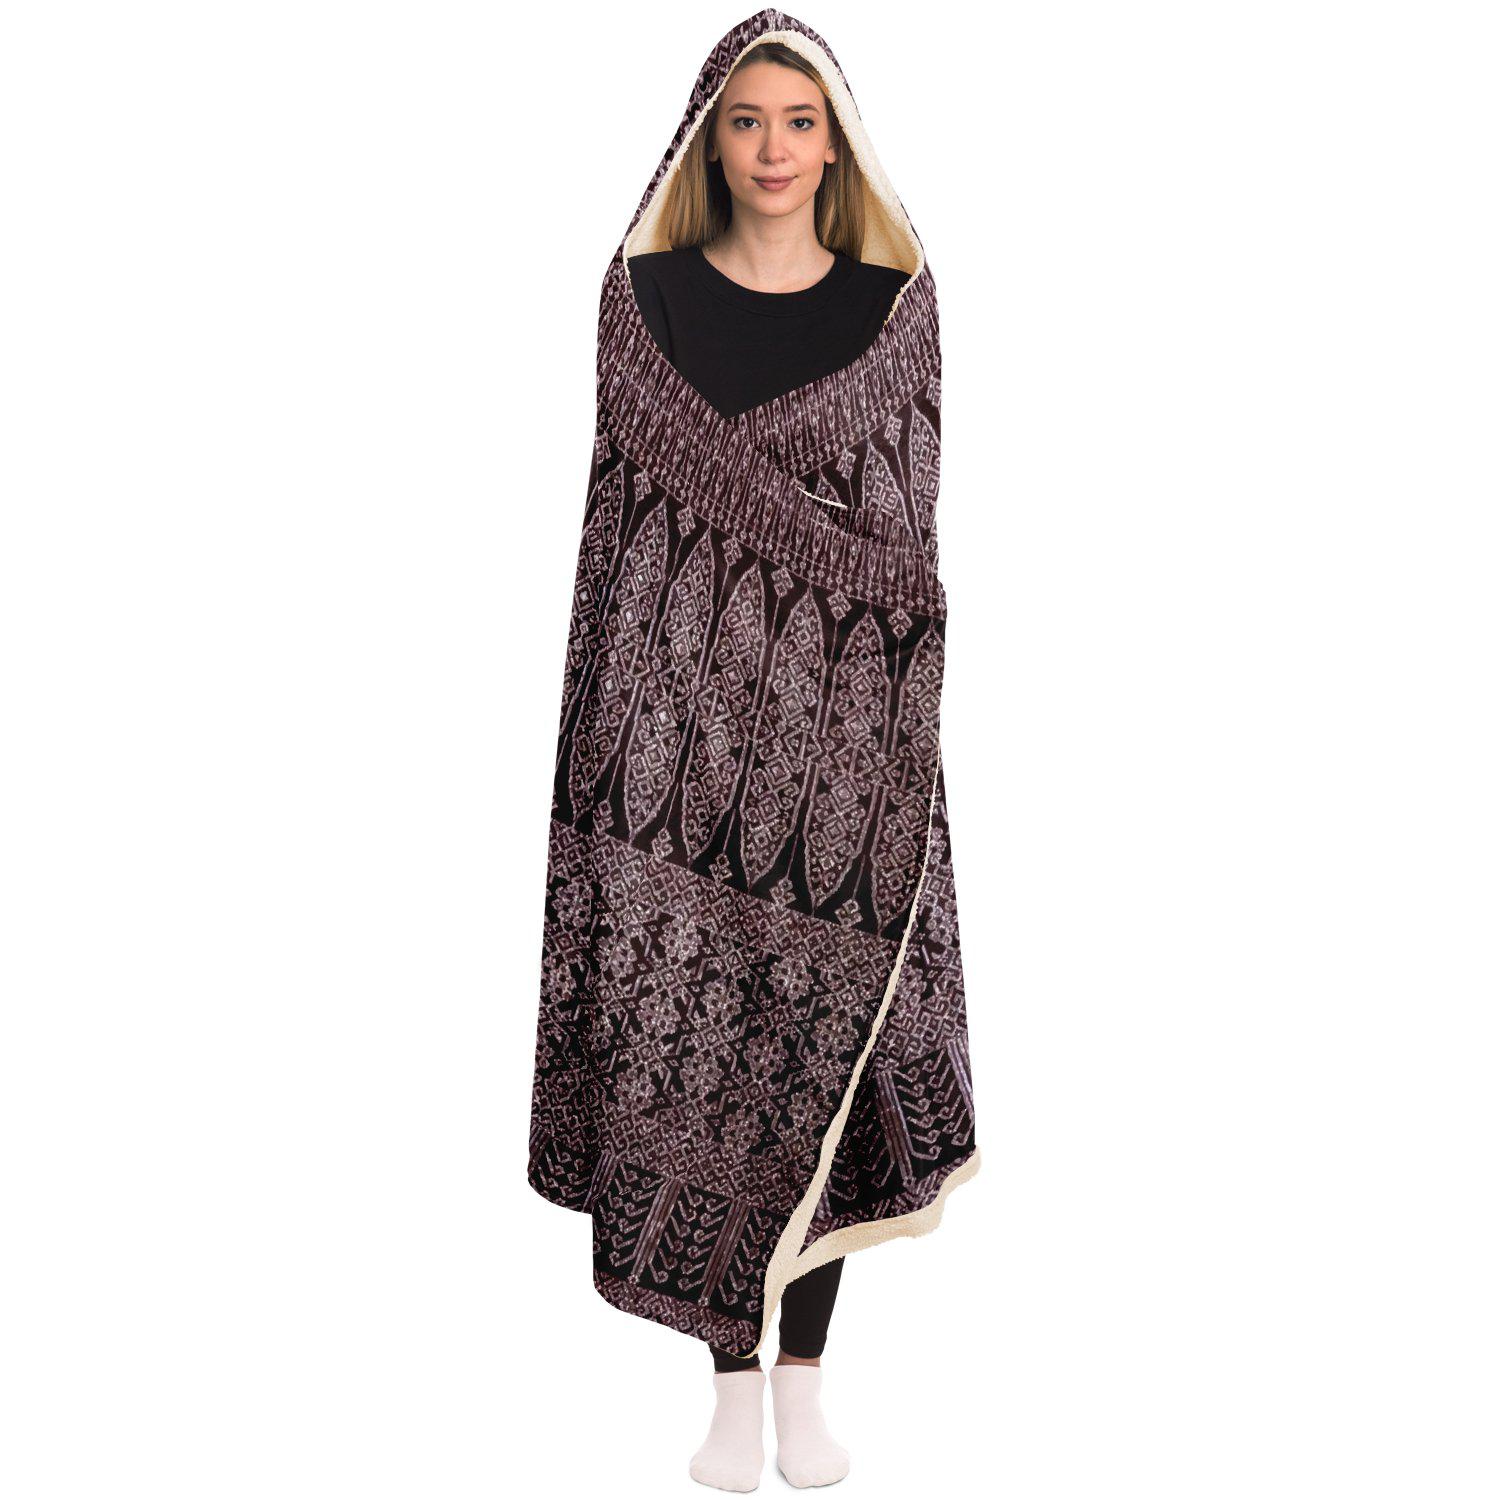 Hooded Blanket - AOP Byzantine Contemporary Hooded Blanket Design